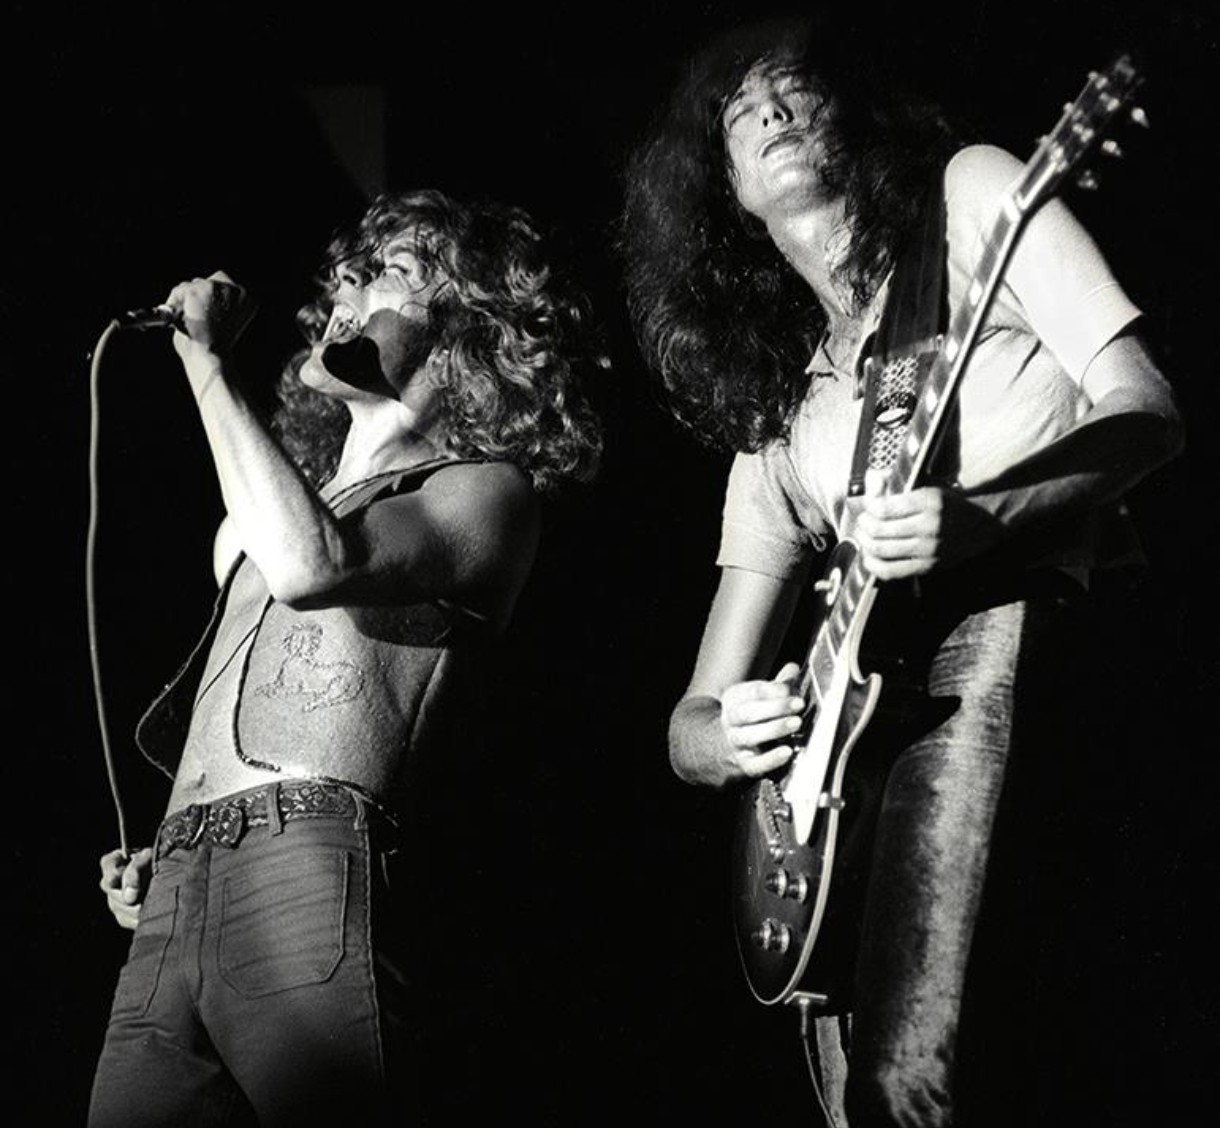 Led Zeppelin, Music photo history